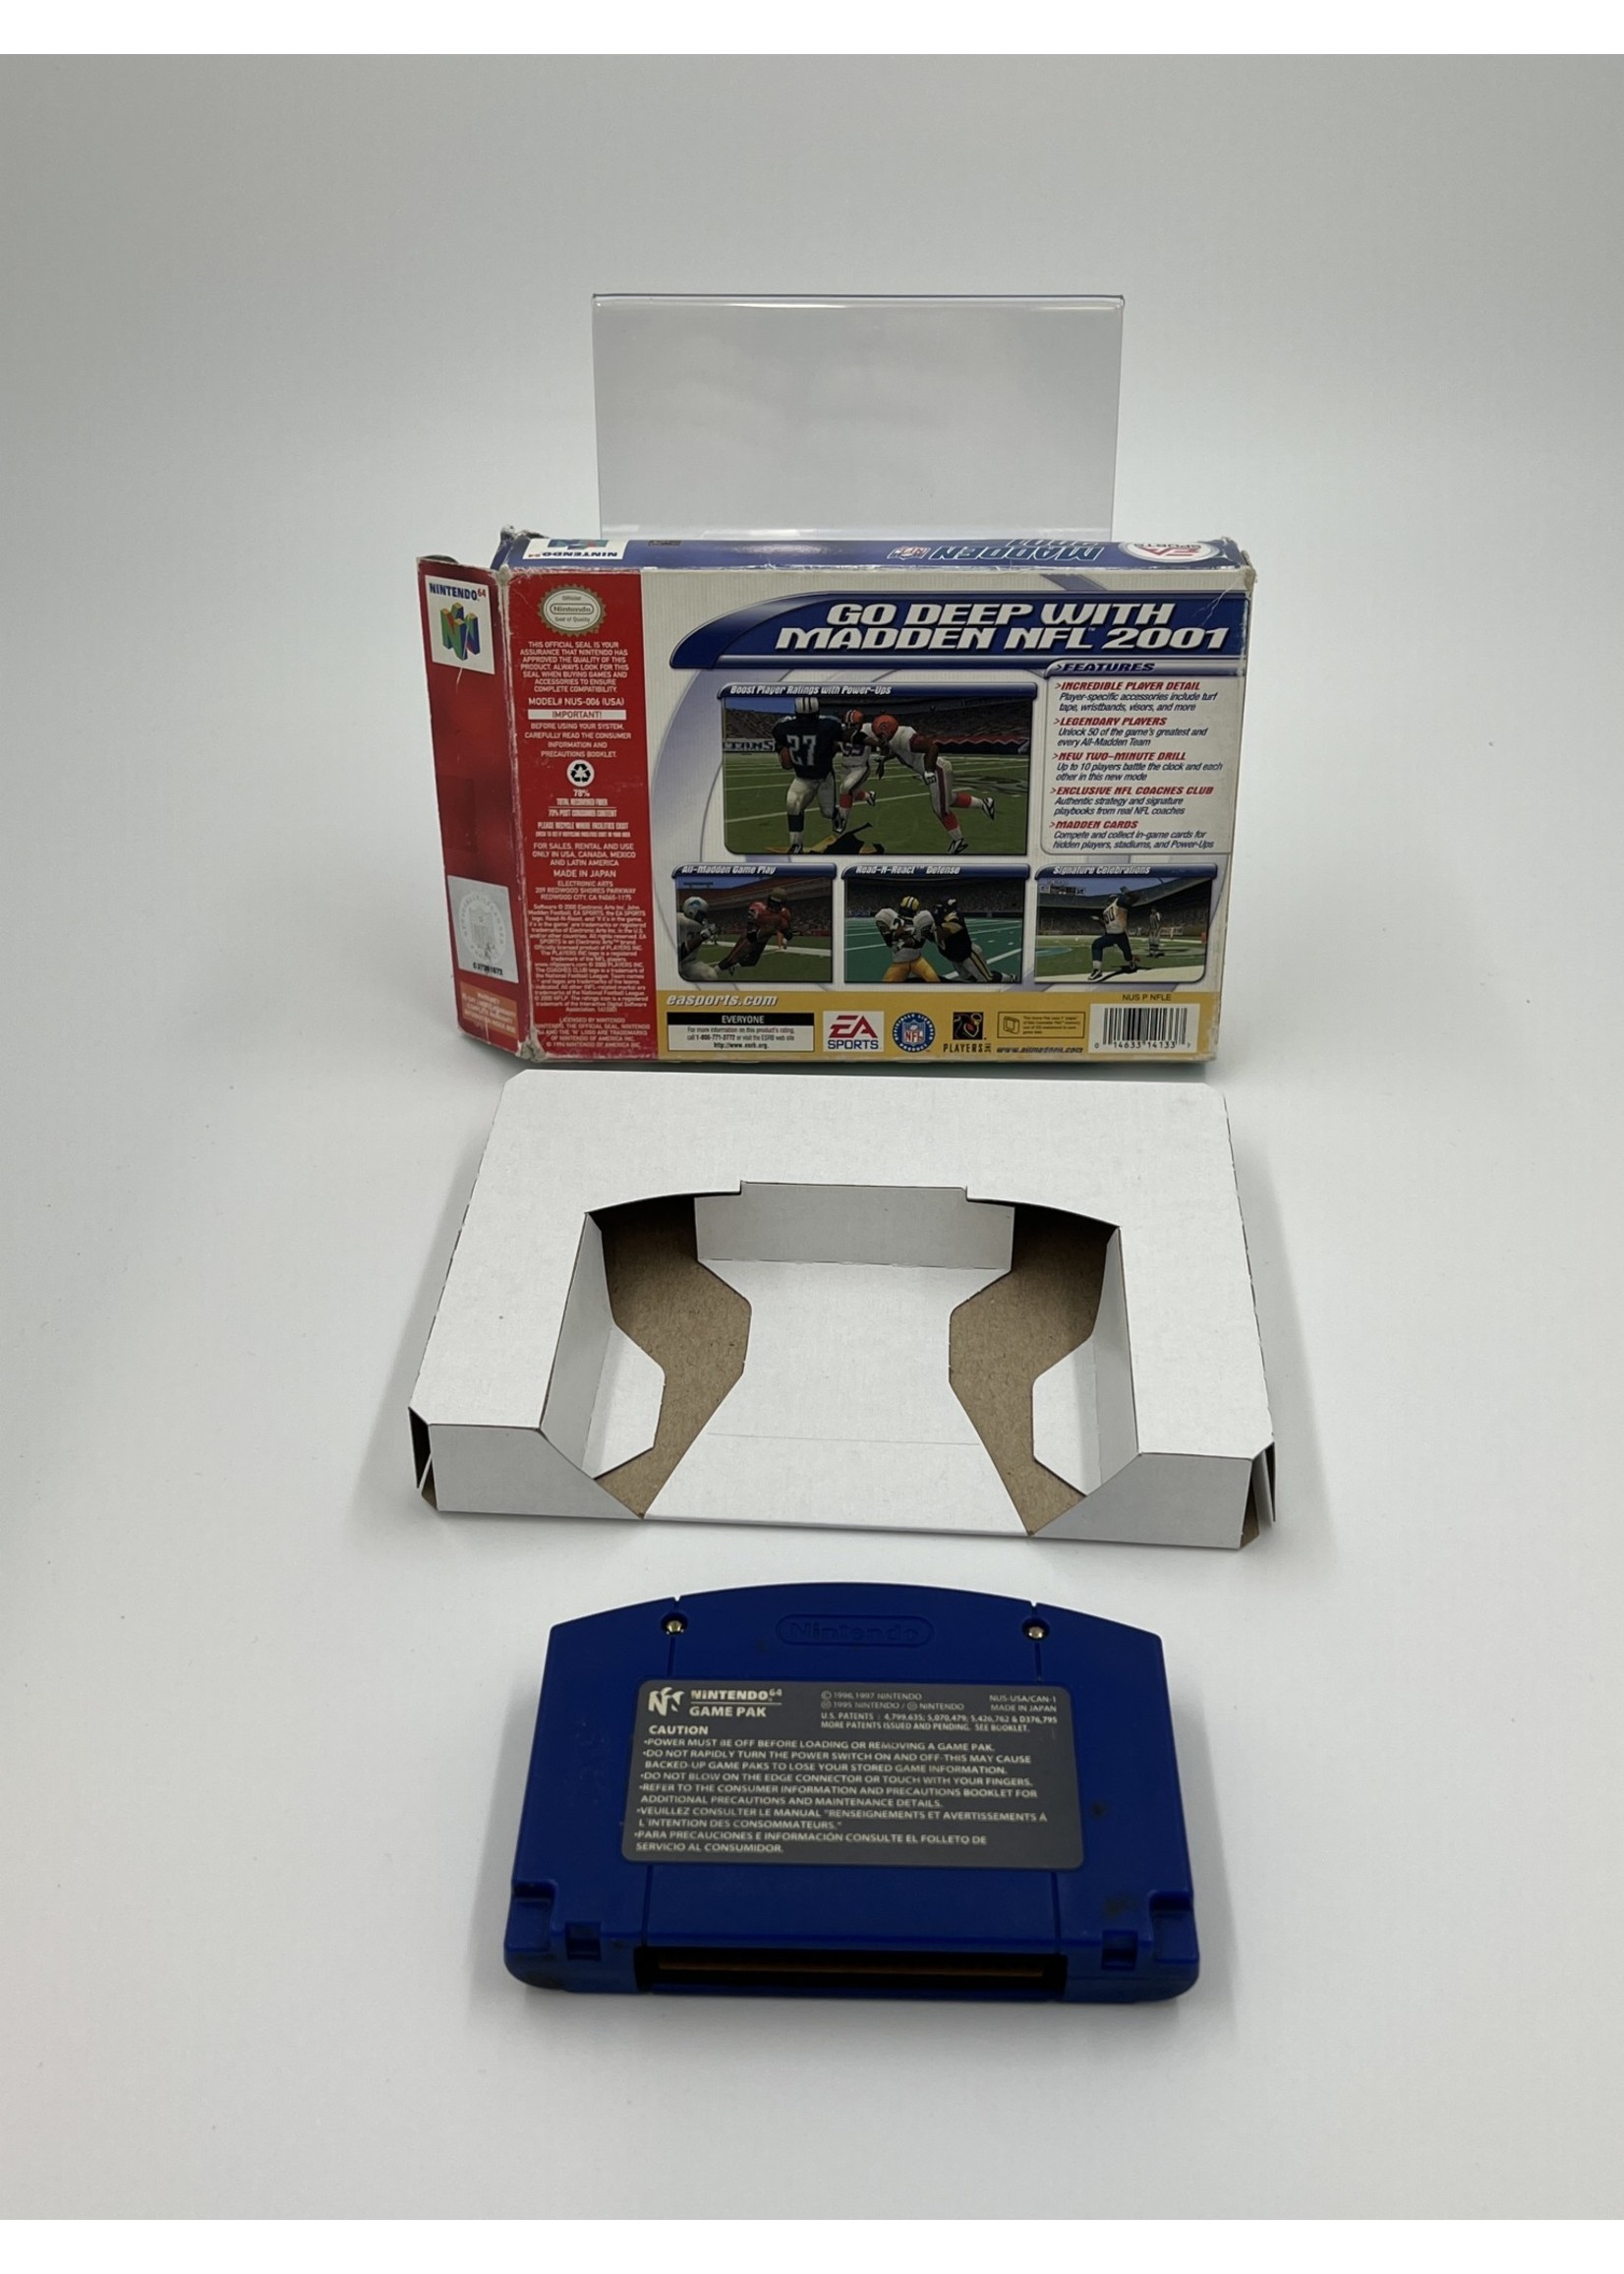 Nintendo Madden 2001 N64